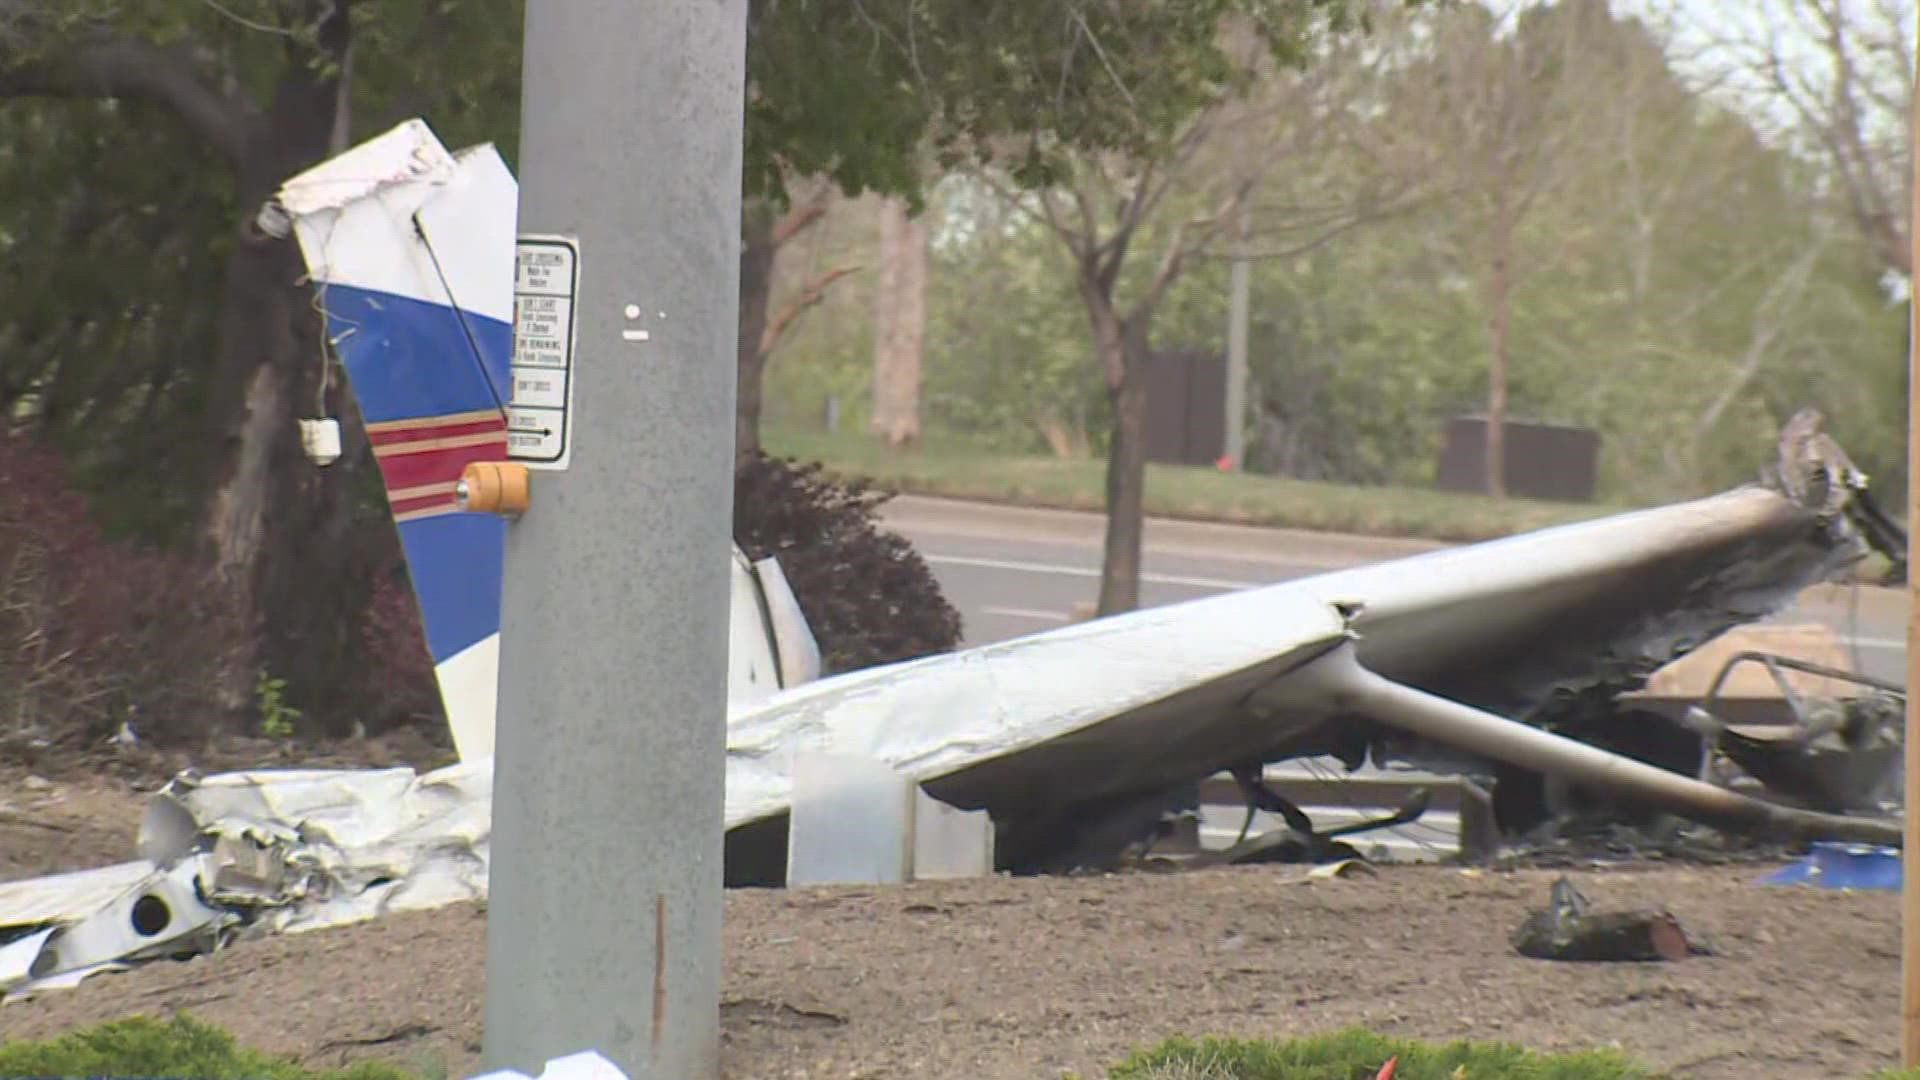 The plane crashed near Eldorado Boulevard and Interlocken Loop in Broomfield, according to North Metro Fire Rescue.